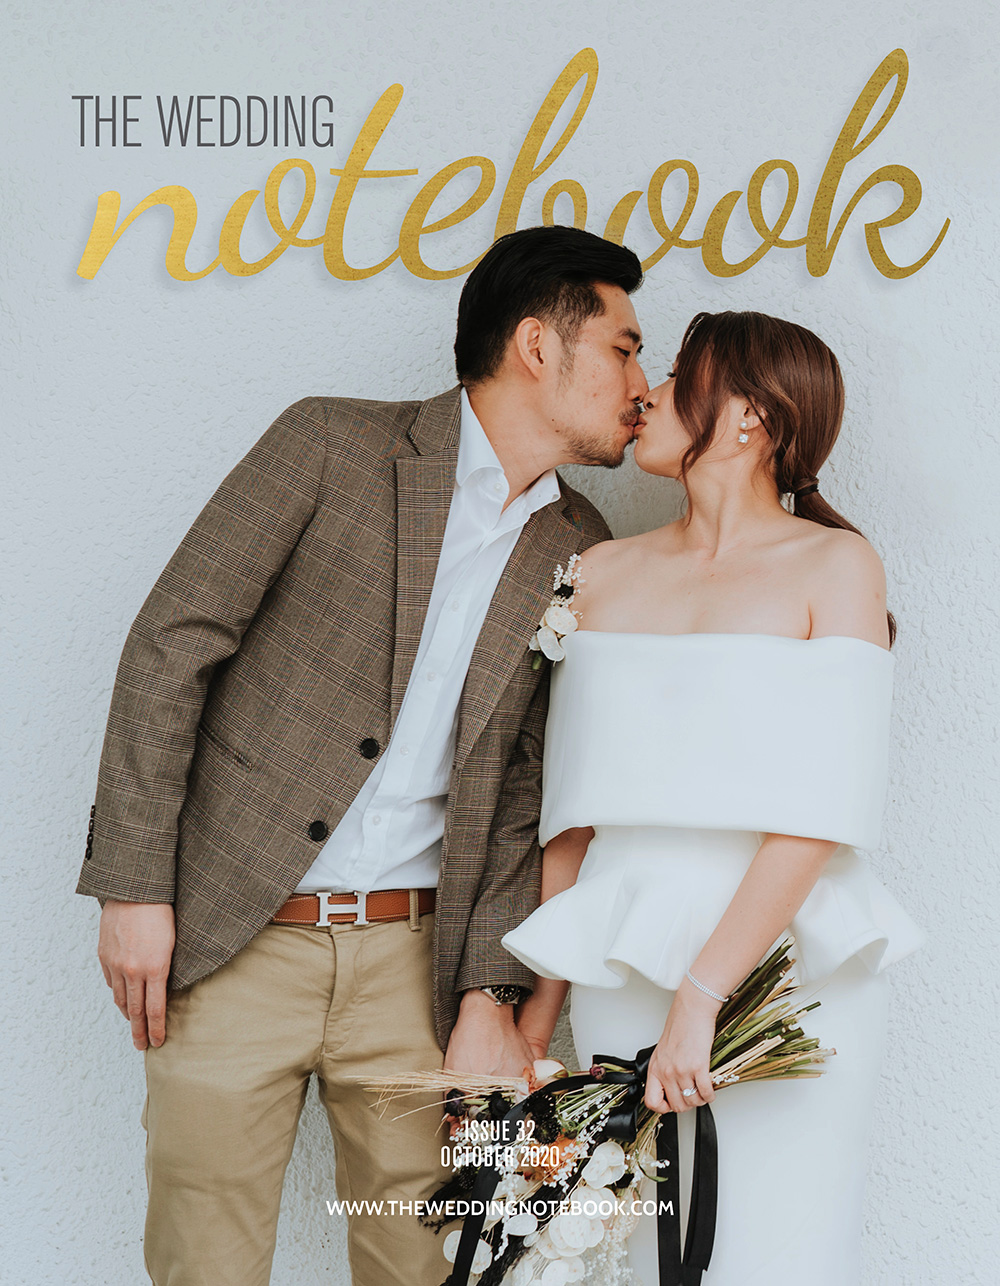 The Wedding Notebook October issue. www.theweddingnotebook.com